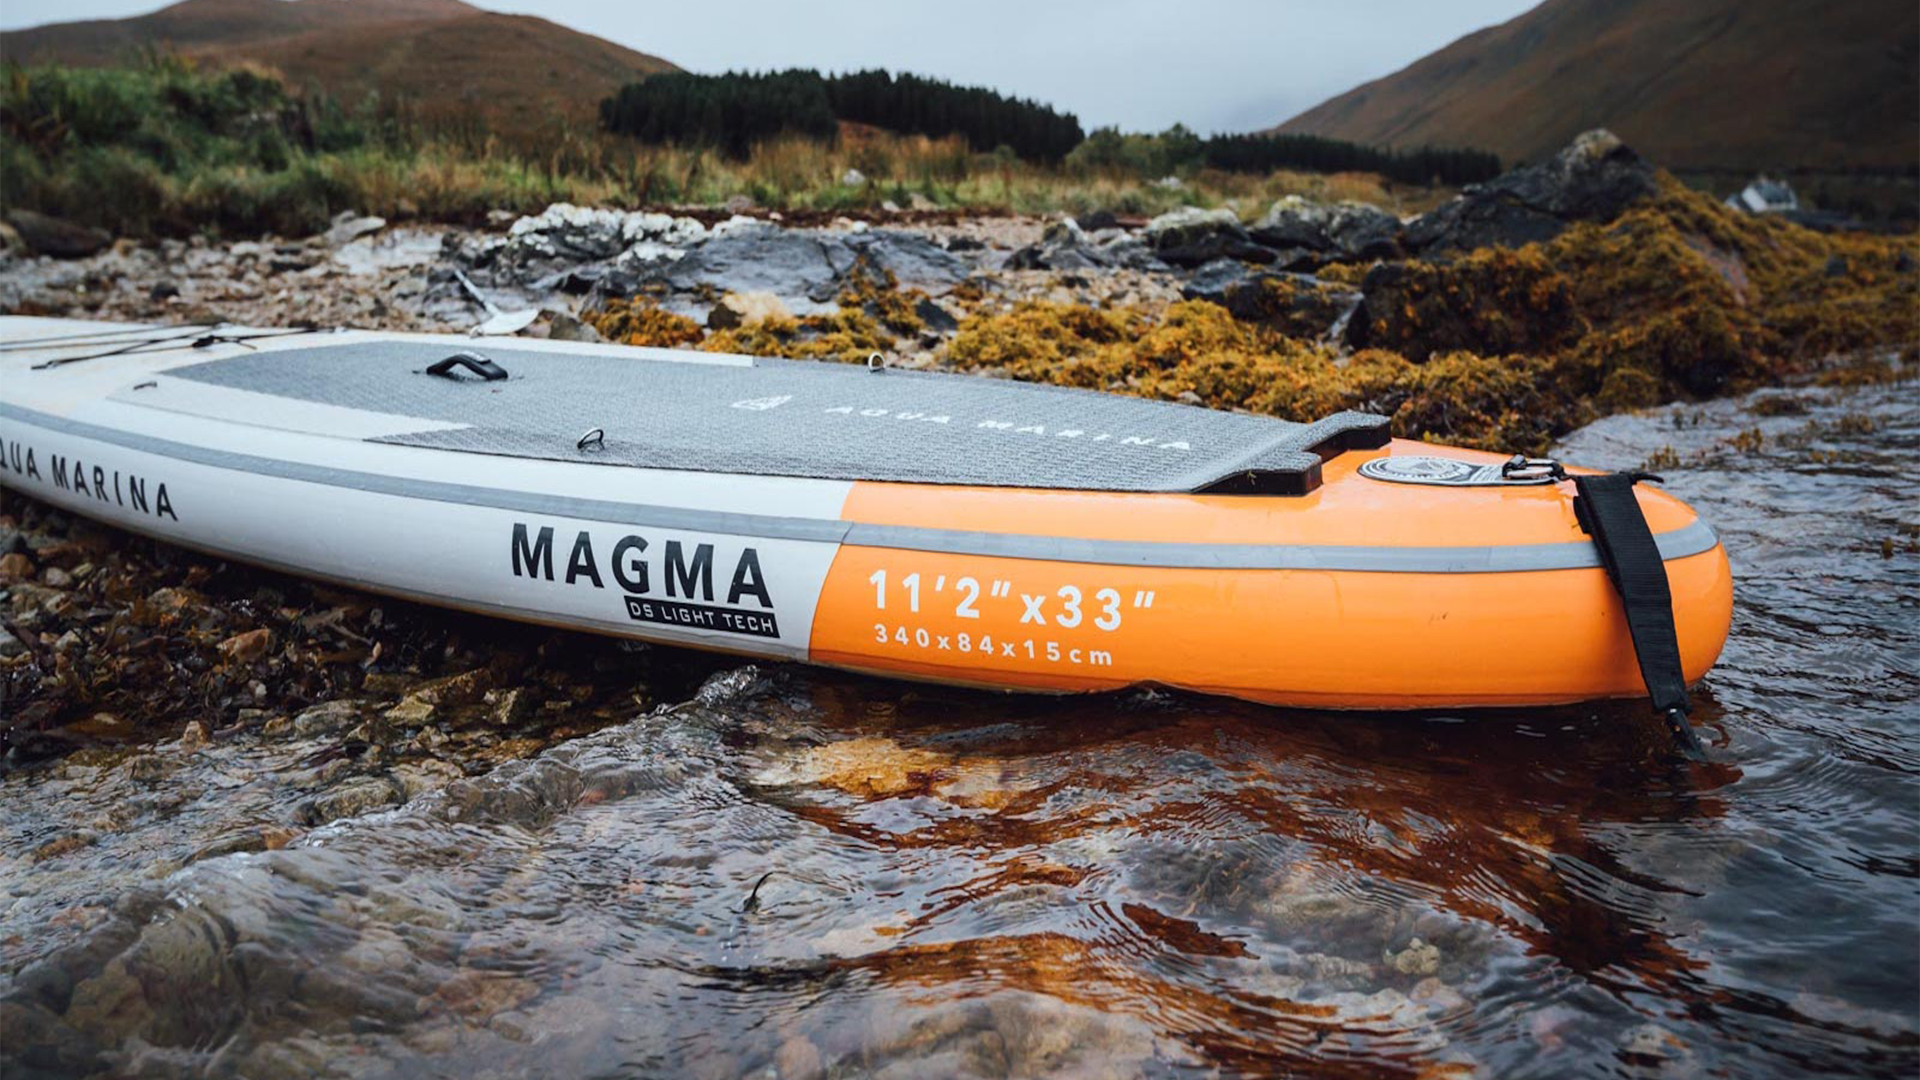 Aqua Marina Magma 11'2” review: full package for SUP newbies